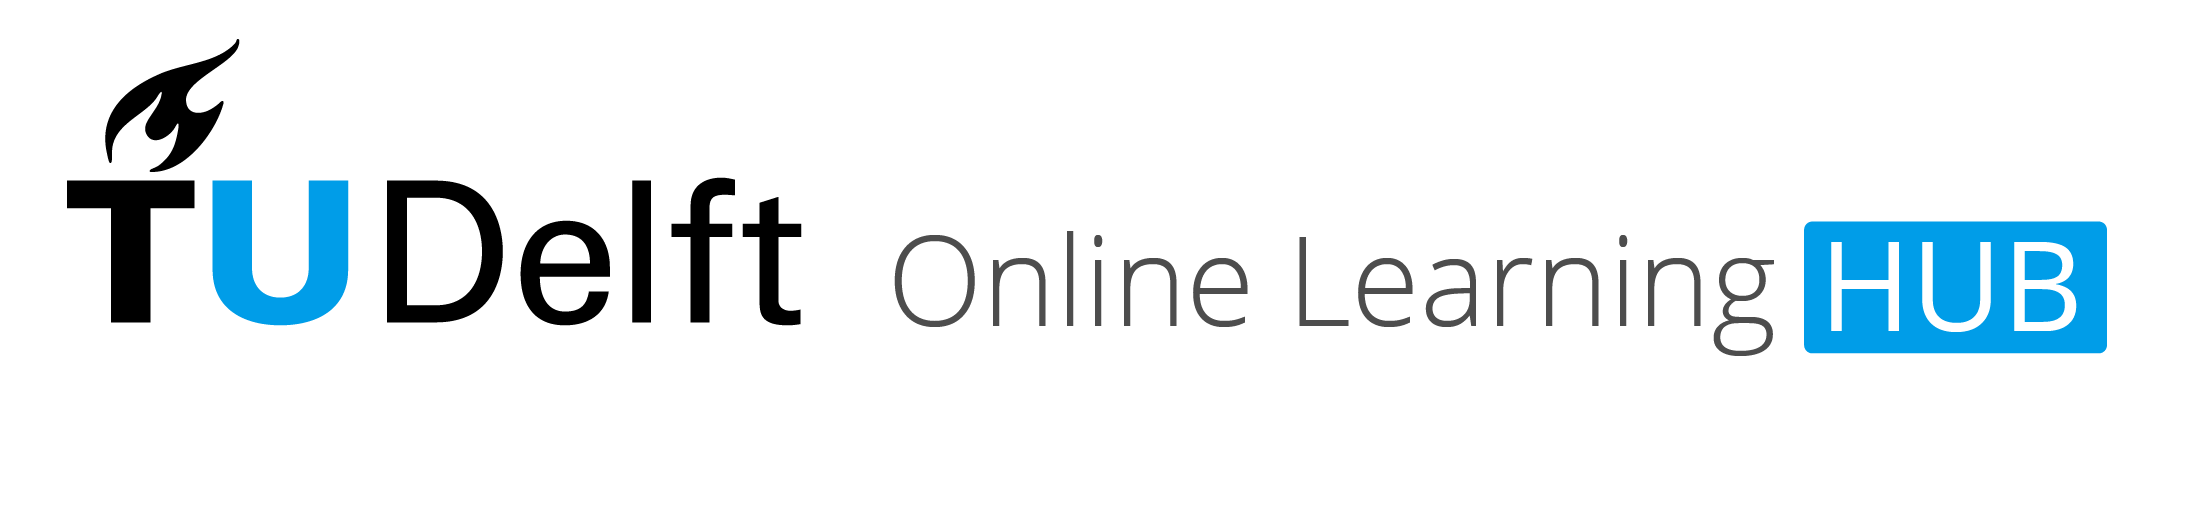 Online Learning HUB